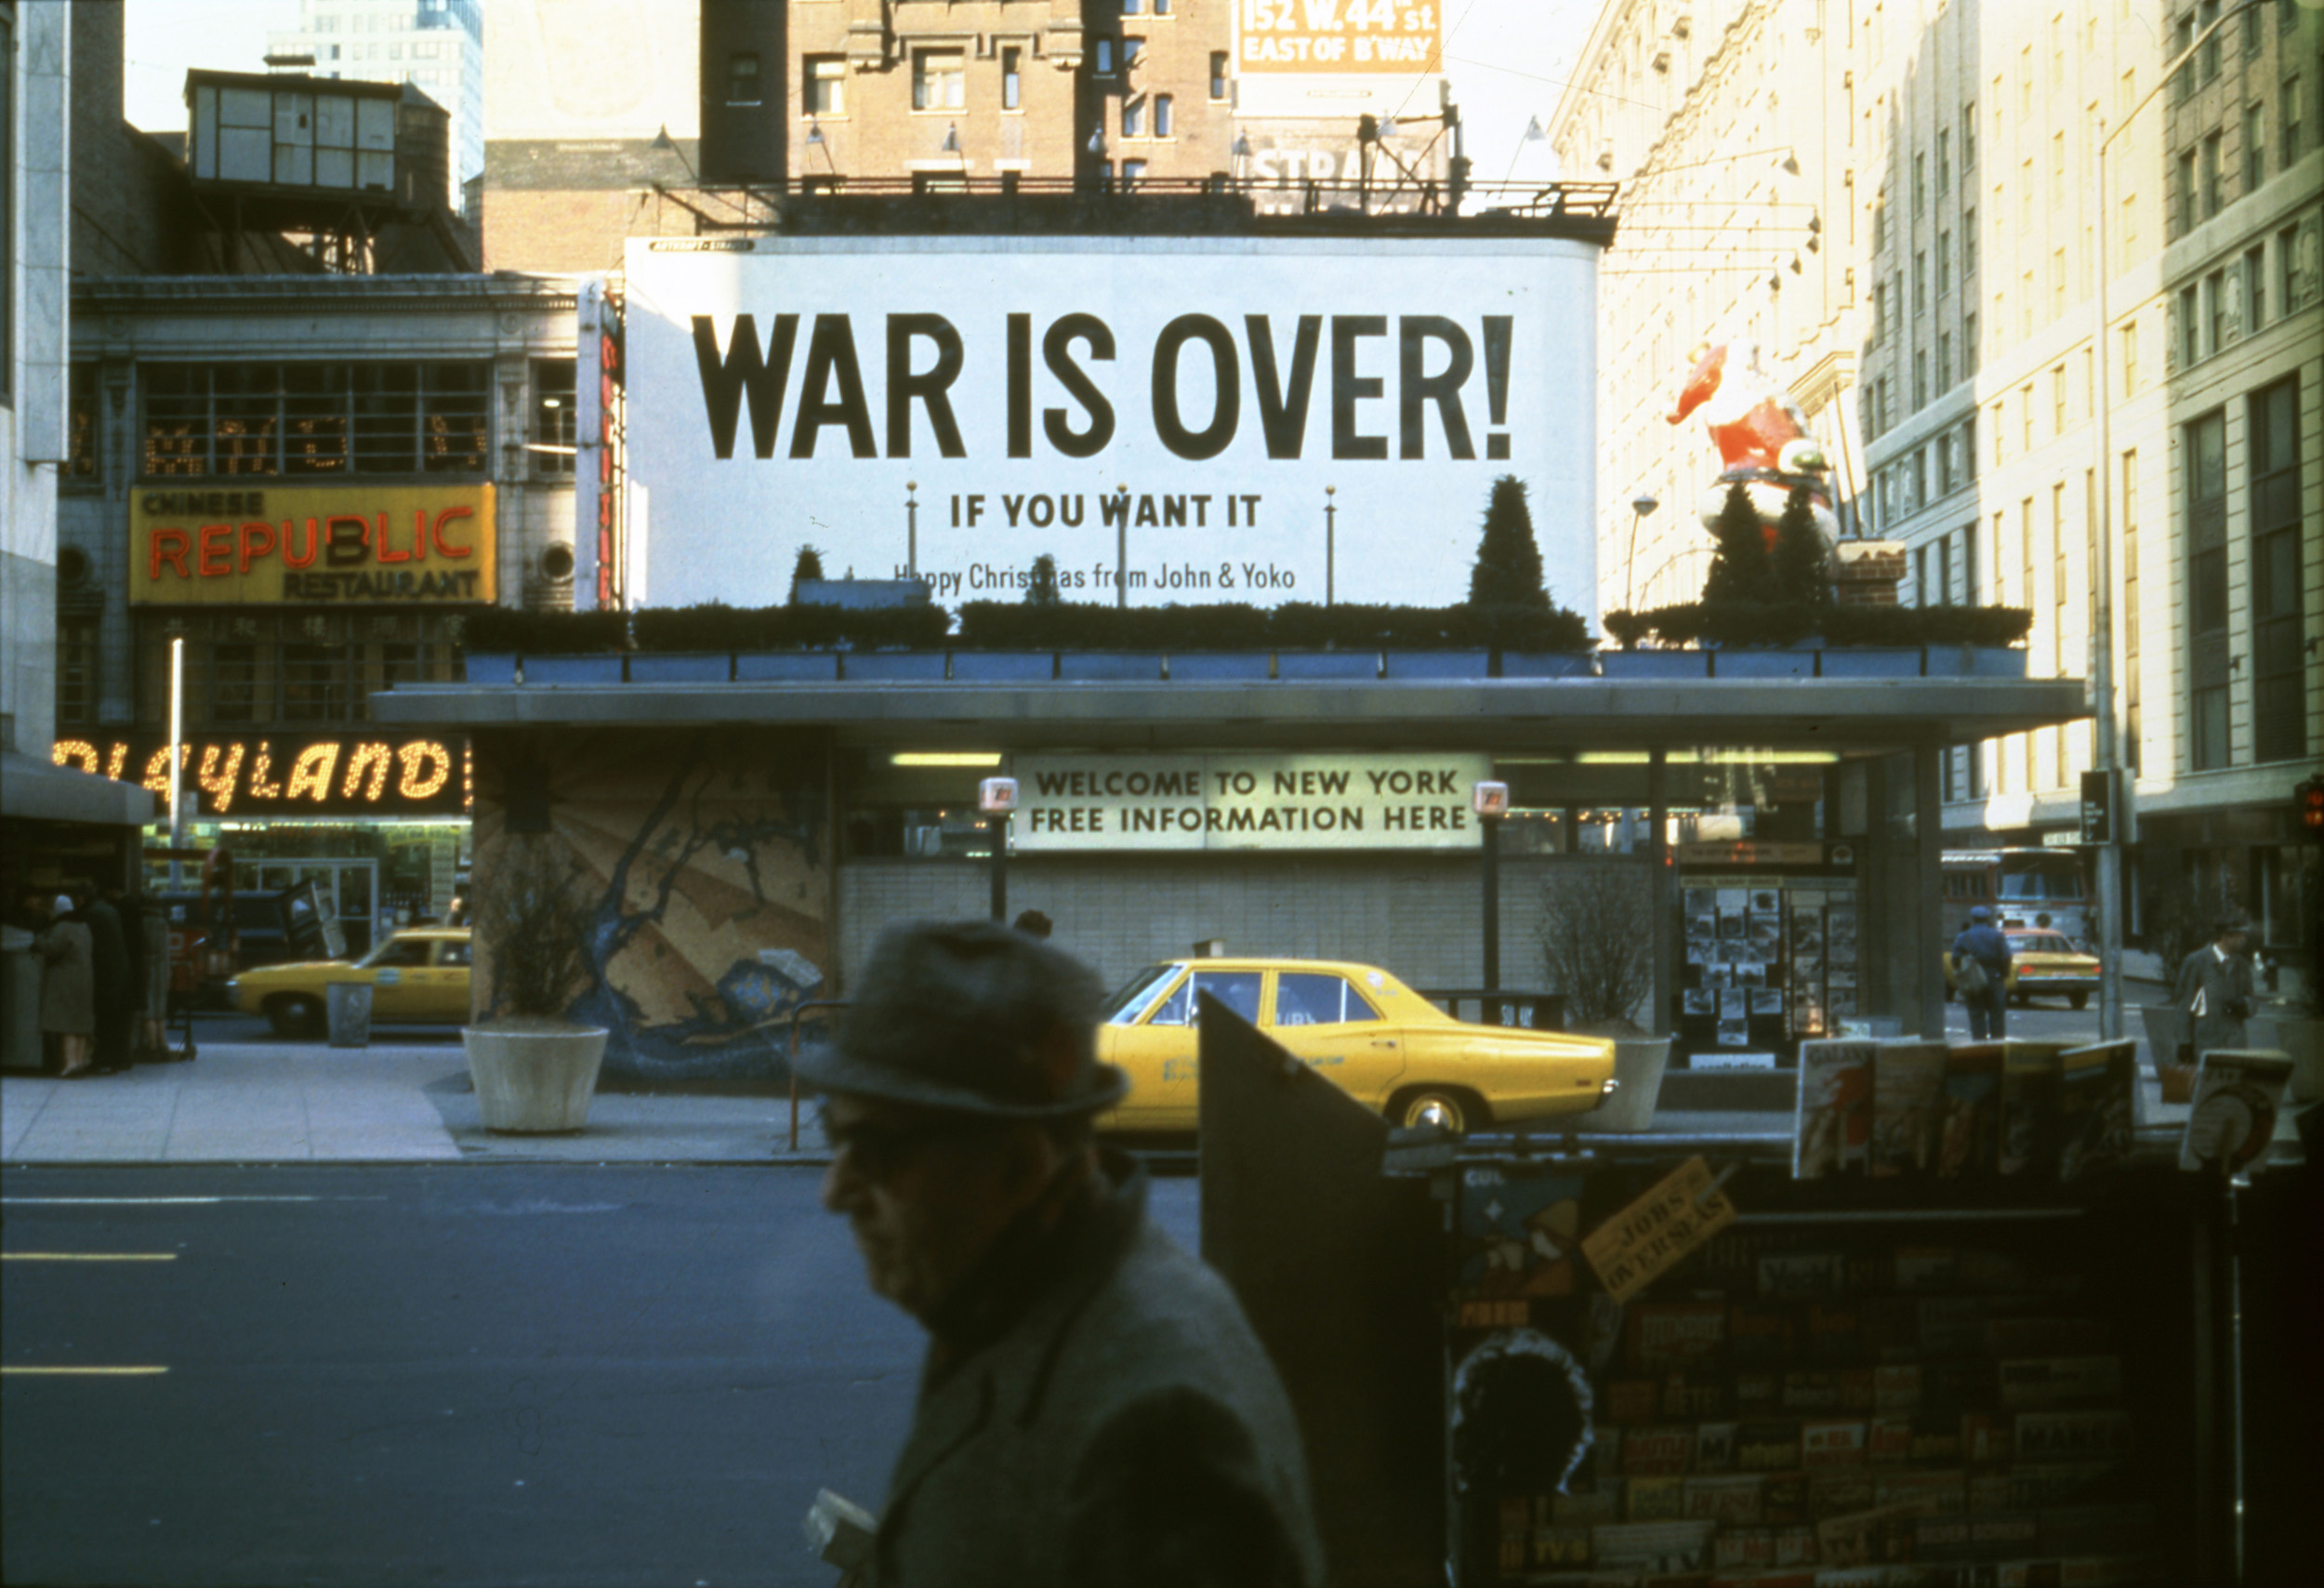 John Lennon Yoko Ono Protestors Vietnam War Poster New York City USA Building 1960s Men Car Taxi 2500x1708